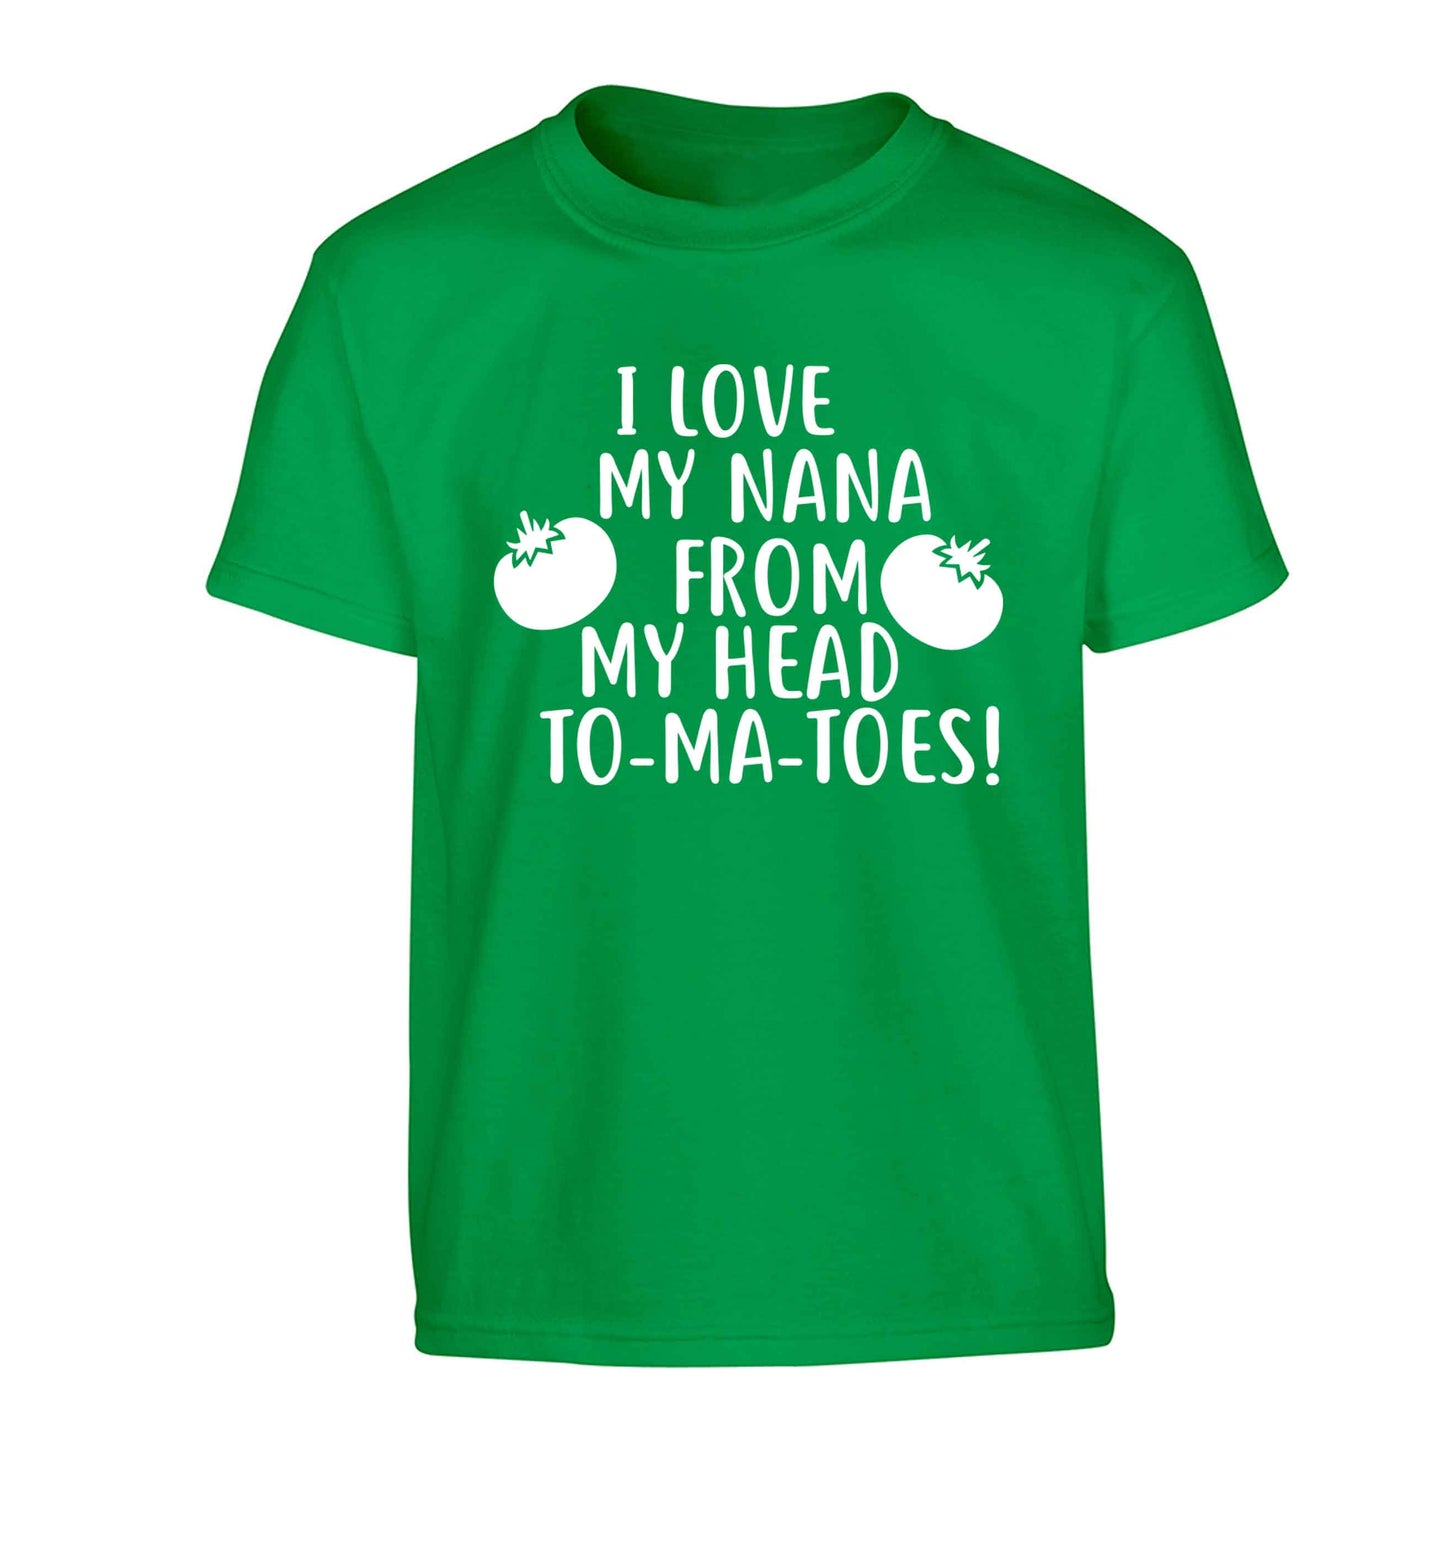 I love my nana from my head to-ma-toes Children's green Tshirt 12-13 Years